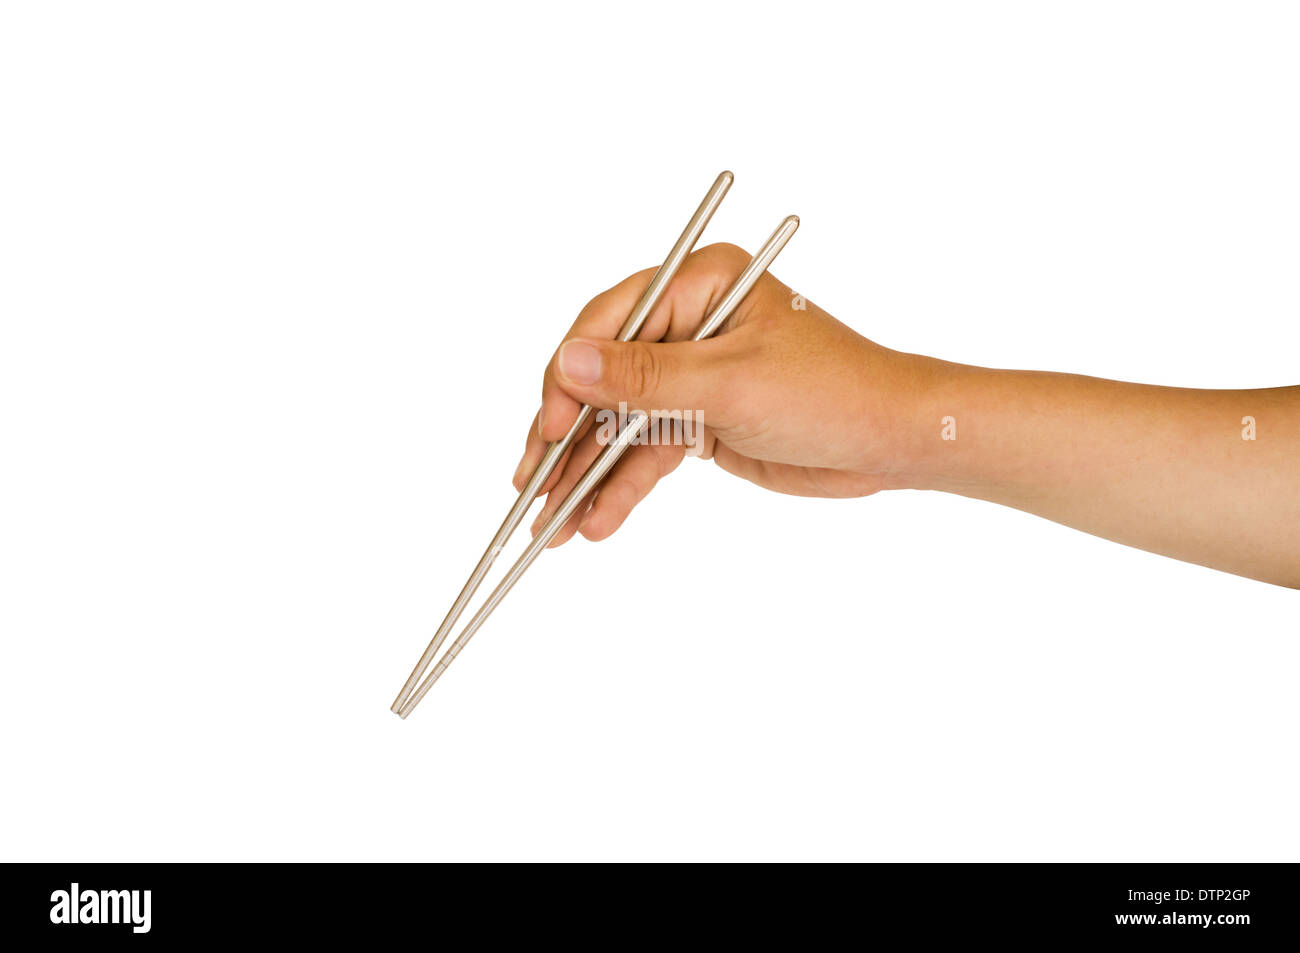 isolated hand holding chopstick Stock Photo